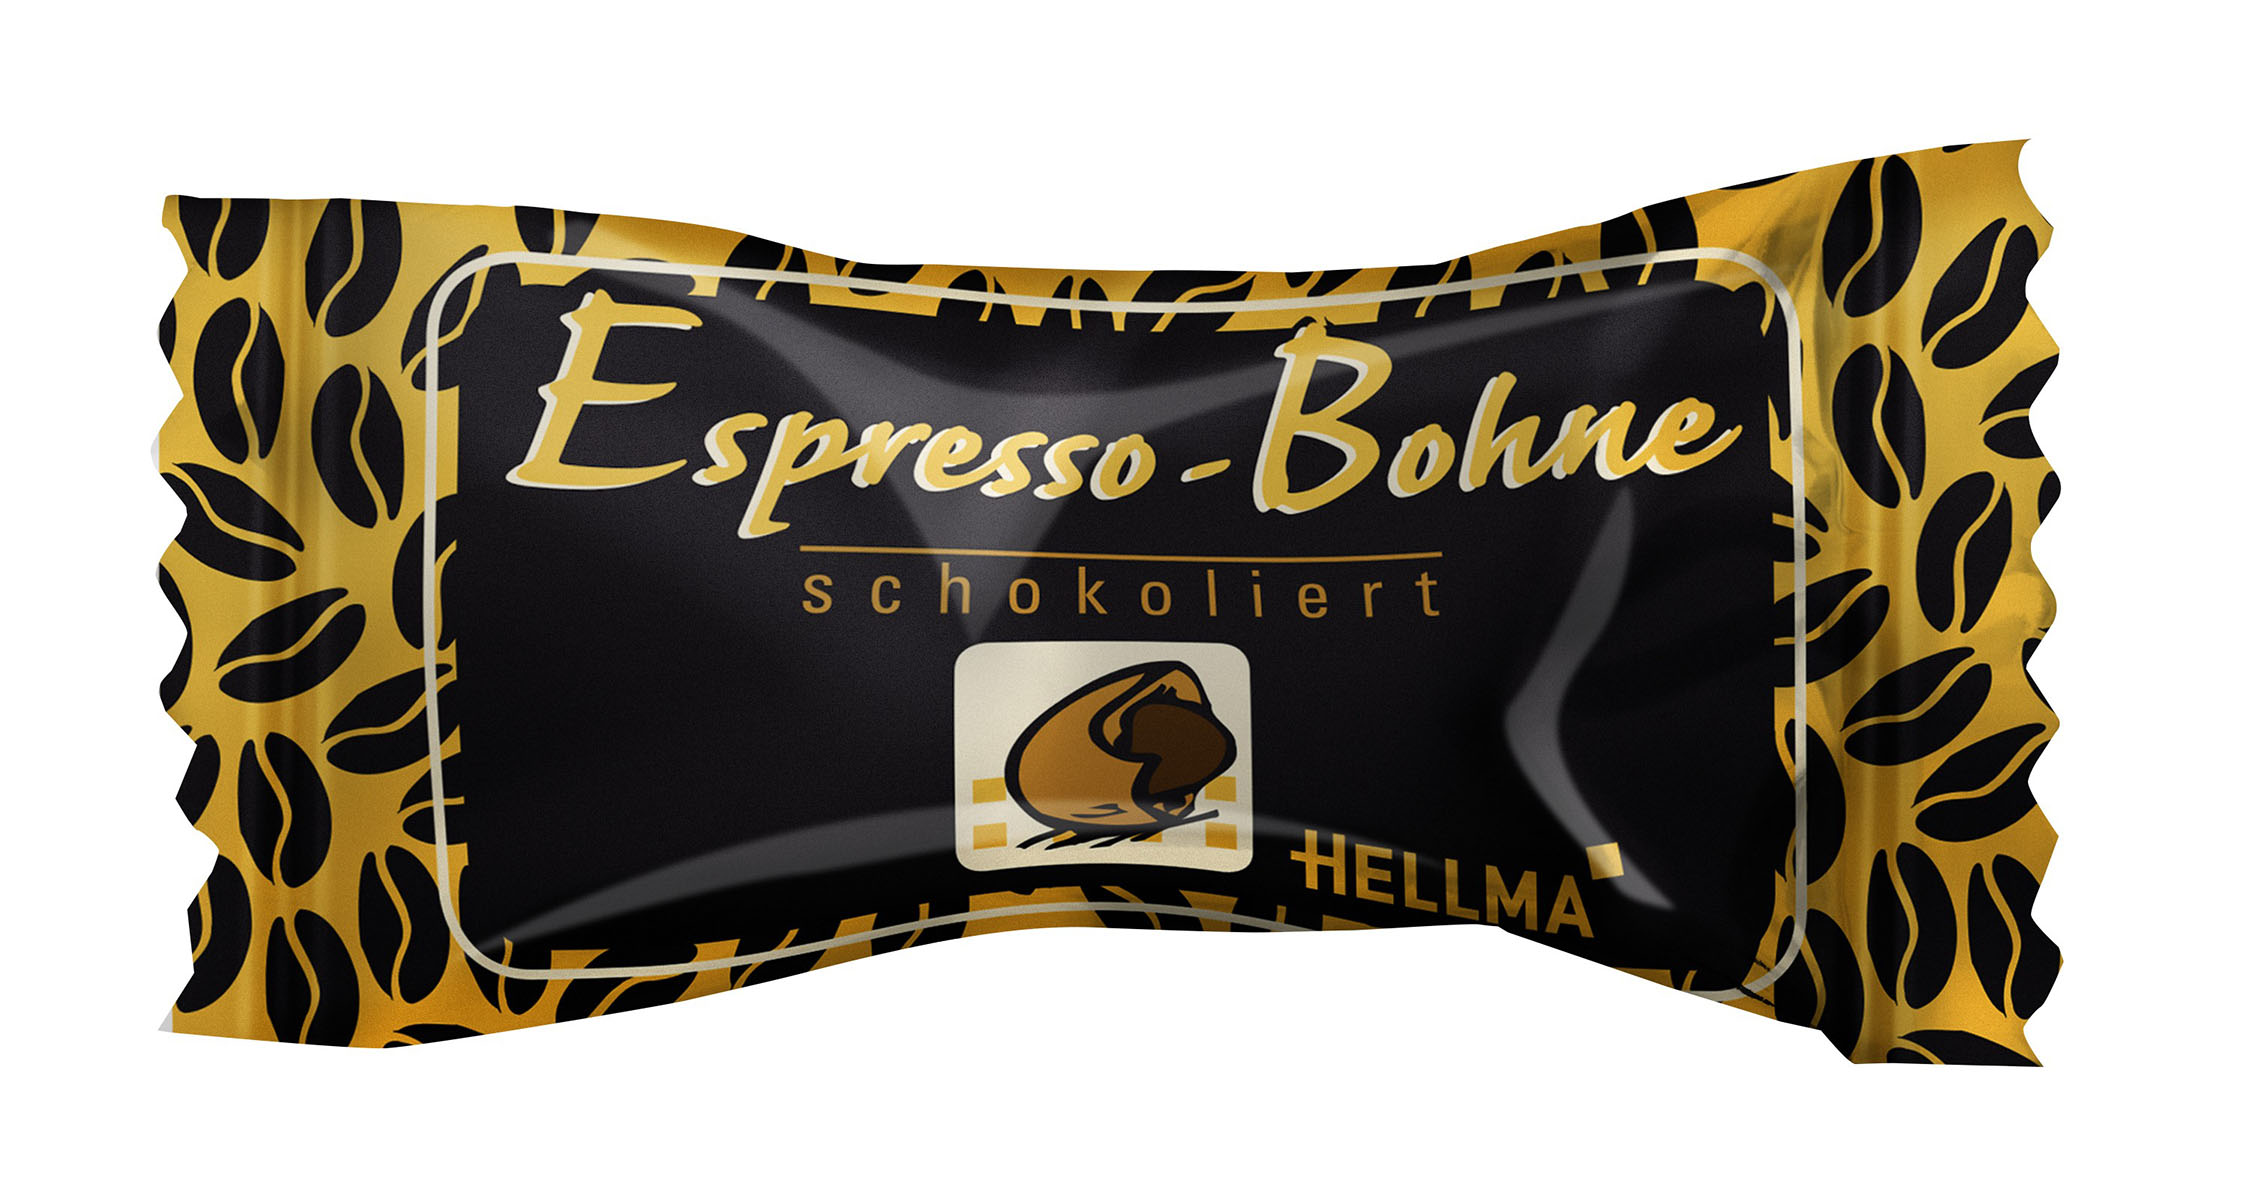 Hellma ESPRESSO-BOHNE ZARTBITTER, Inhalt: 380 Stück à 1,1 g je Karton.